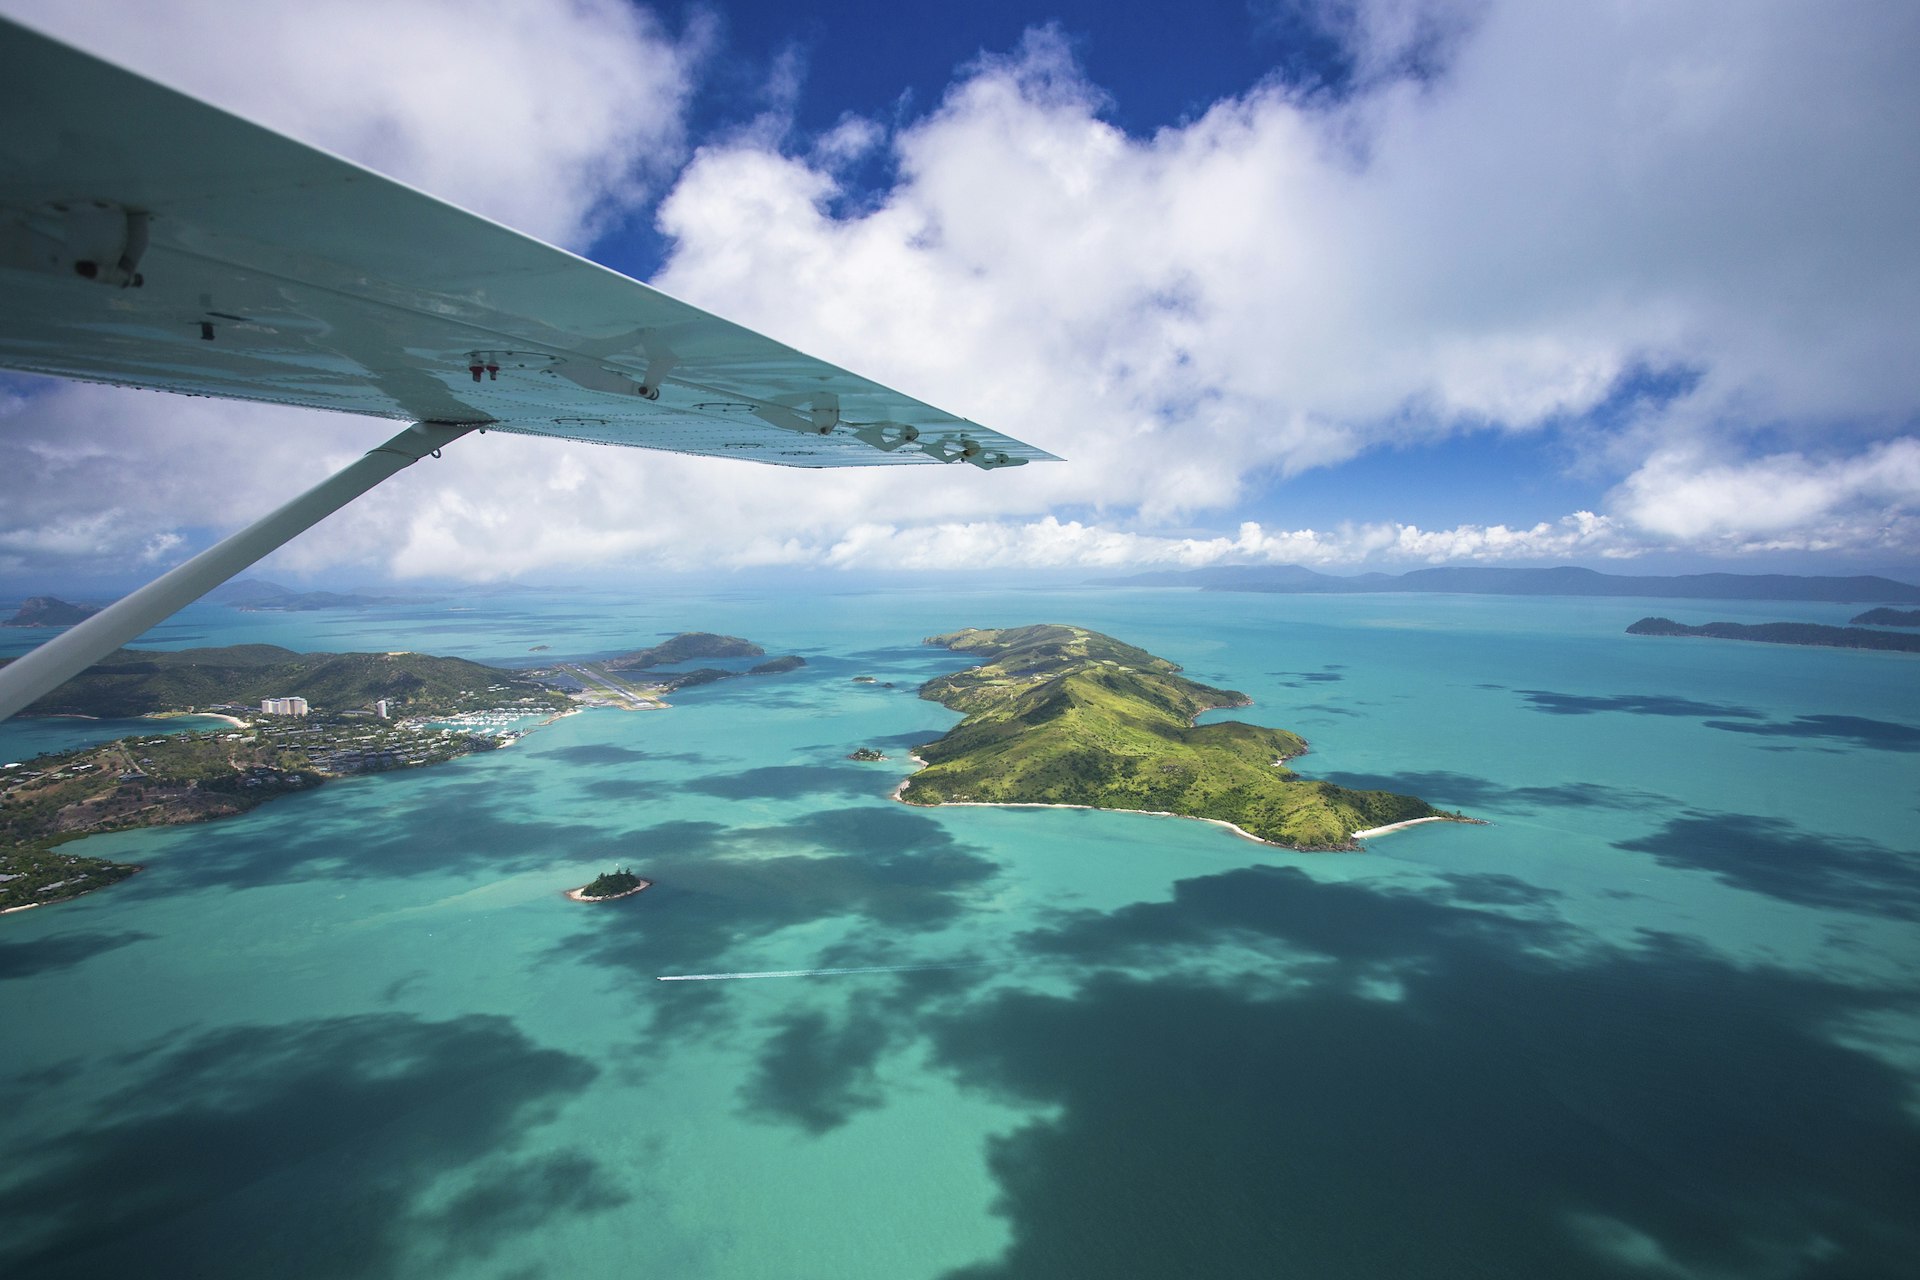 Flying over the Hamilton Islands, Australia